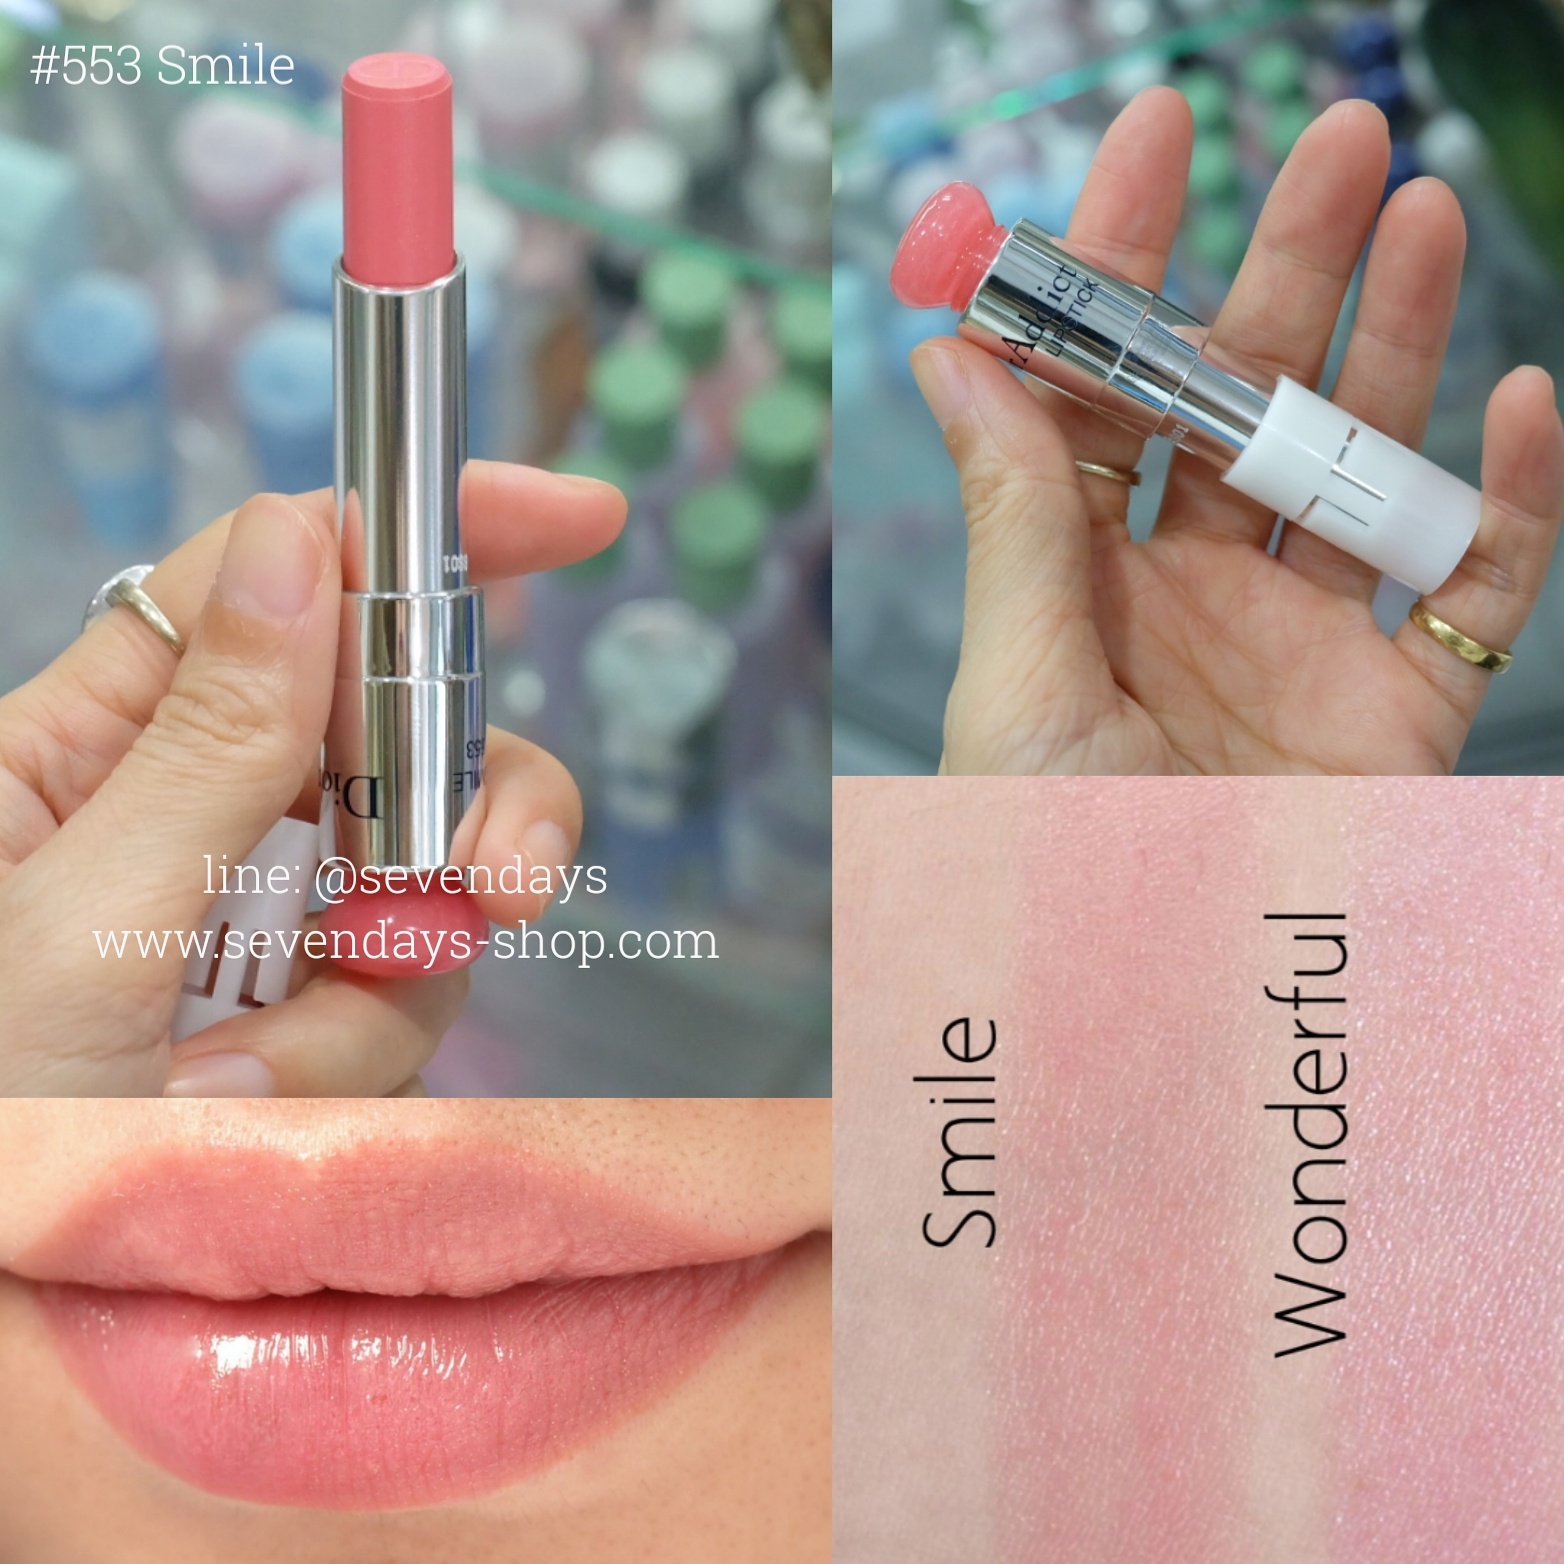 dior 553 lipstick